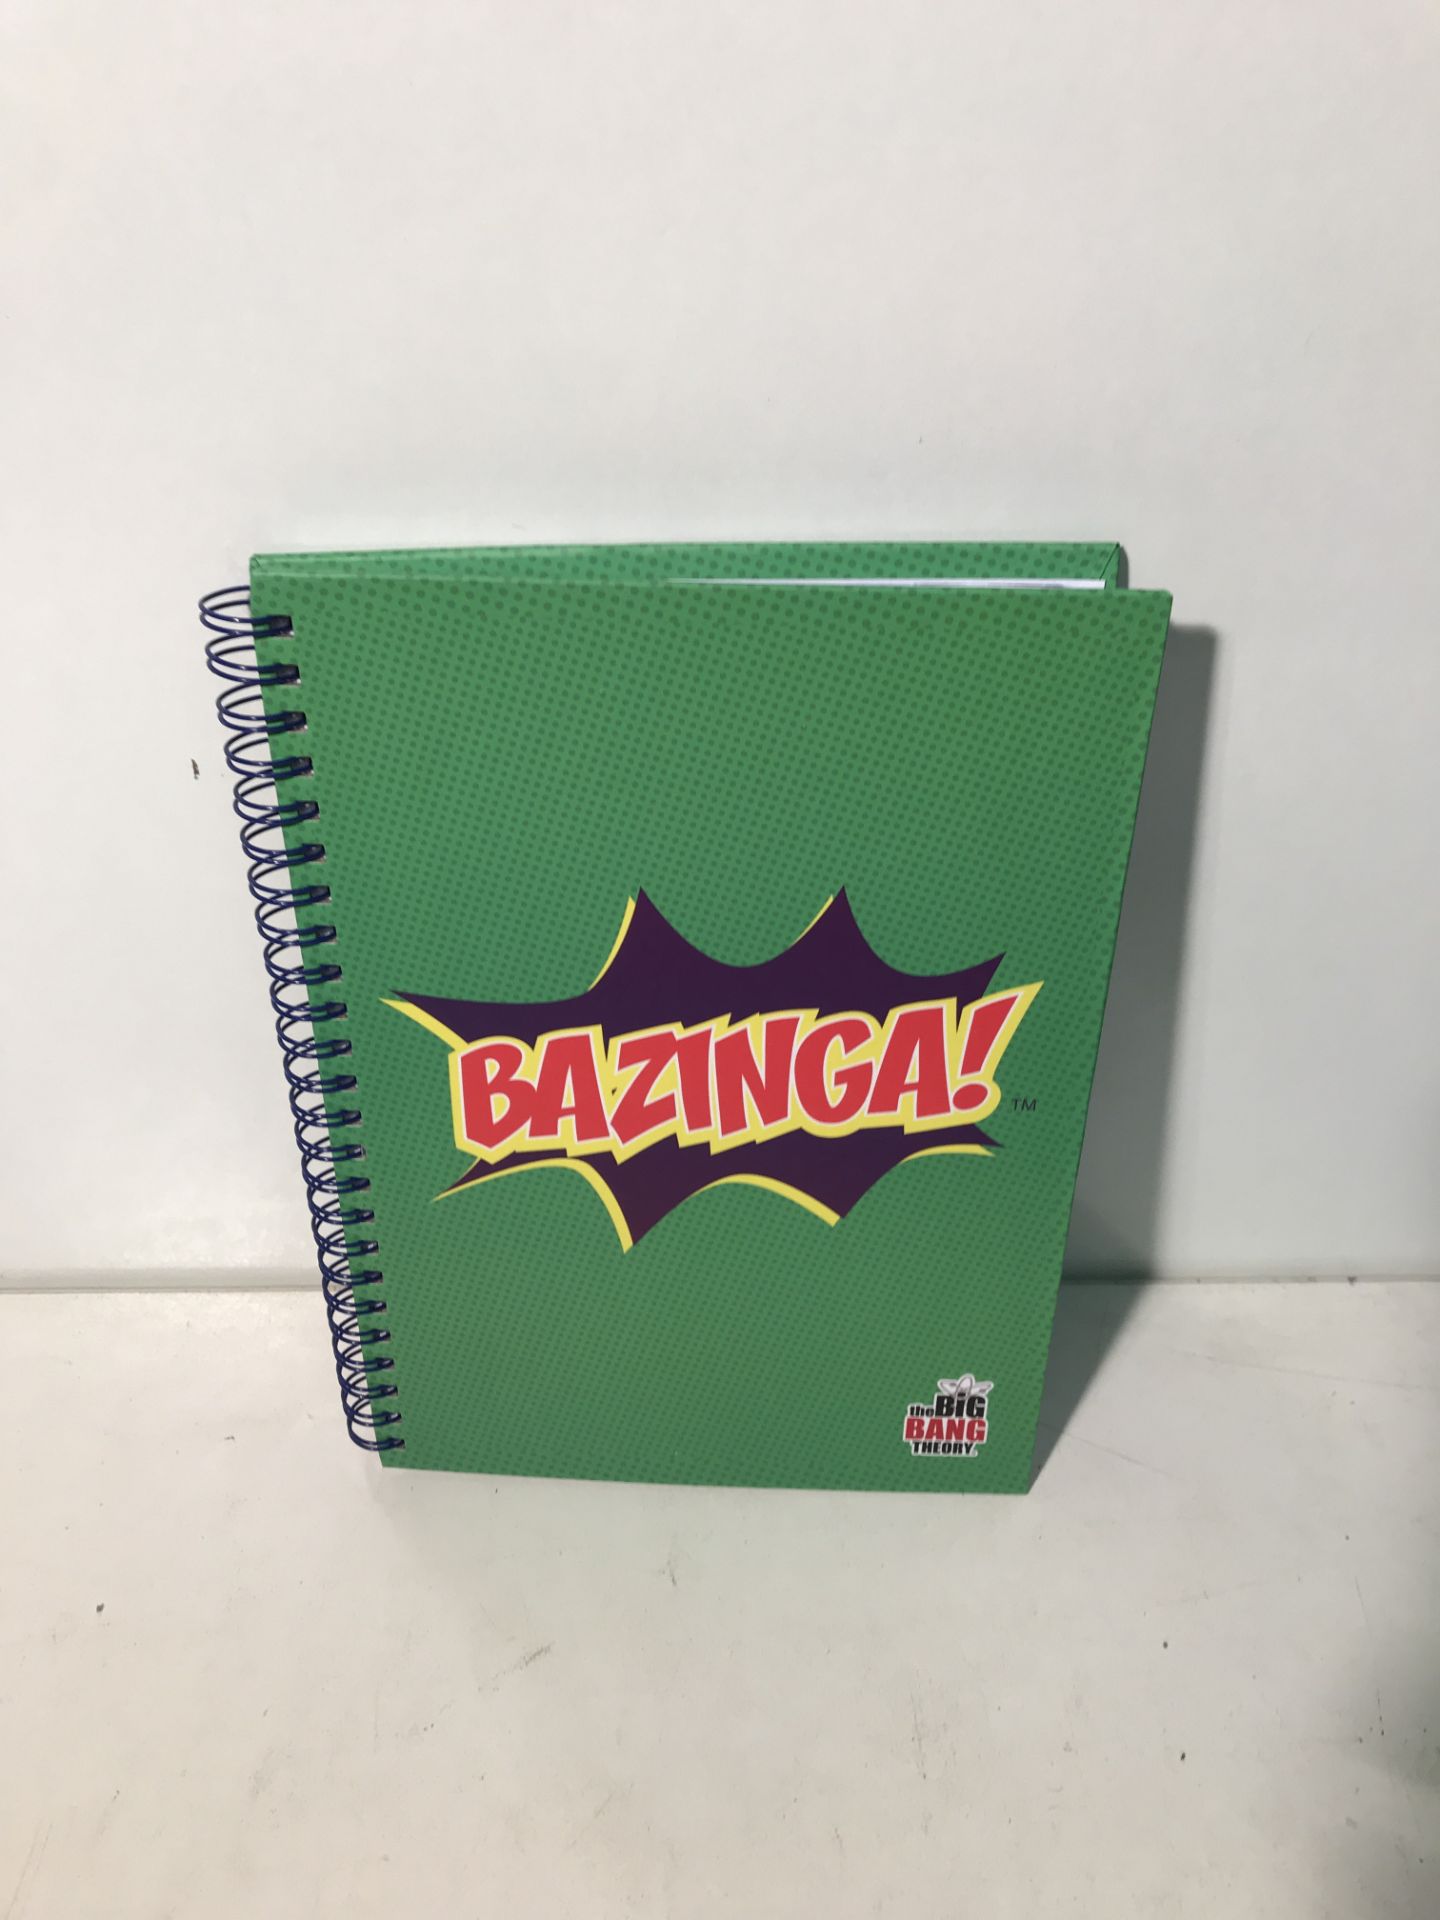 40 x Big Bang Theory Bazinga! A5 Notebooks | RRP £172.00